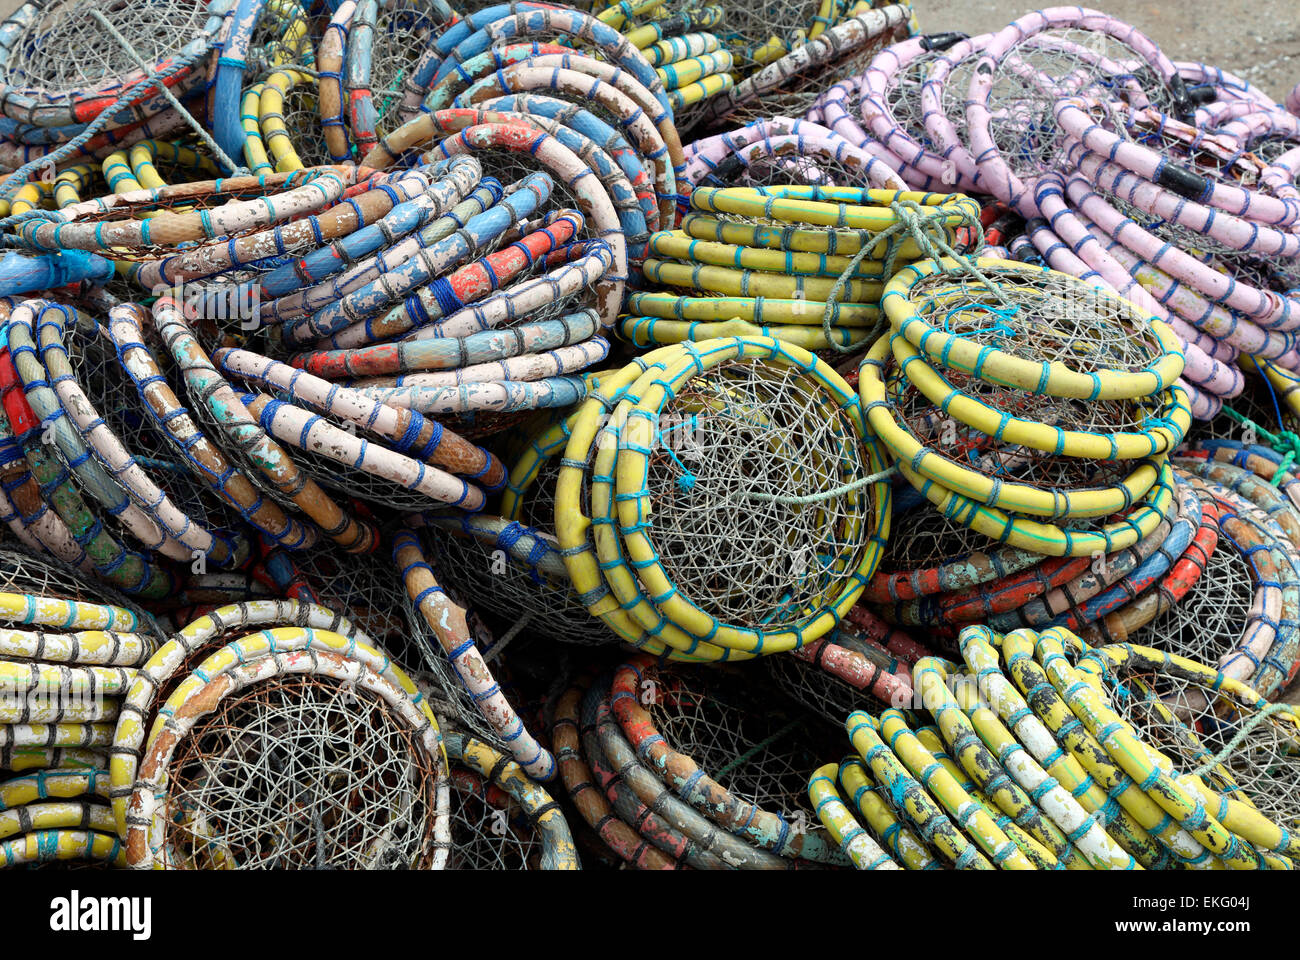 Abu dhabi fishing nets hi-res stock photography and images - Alamy